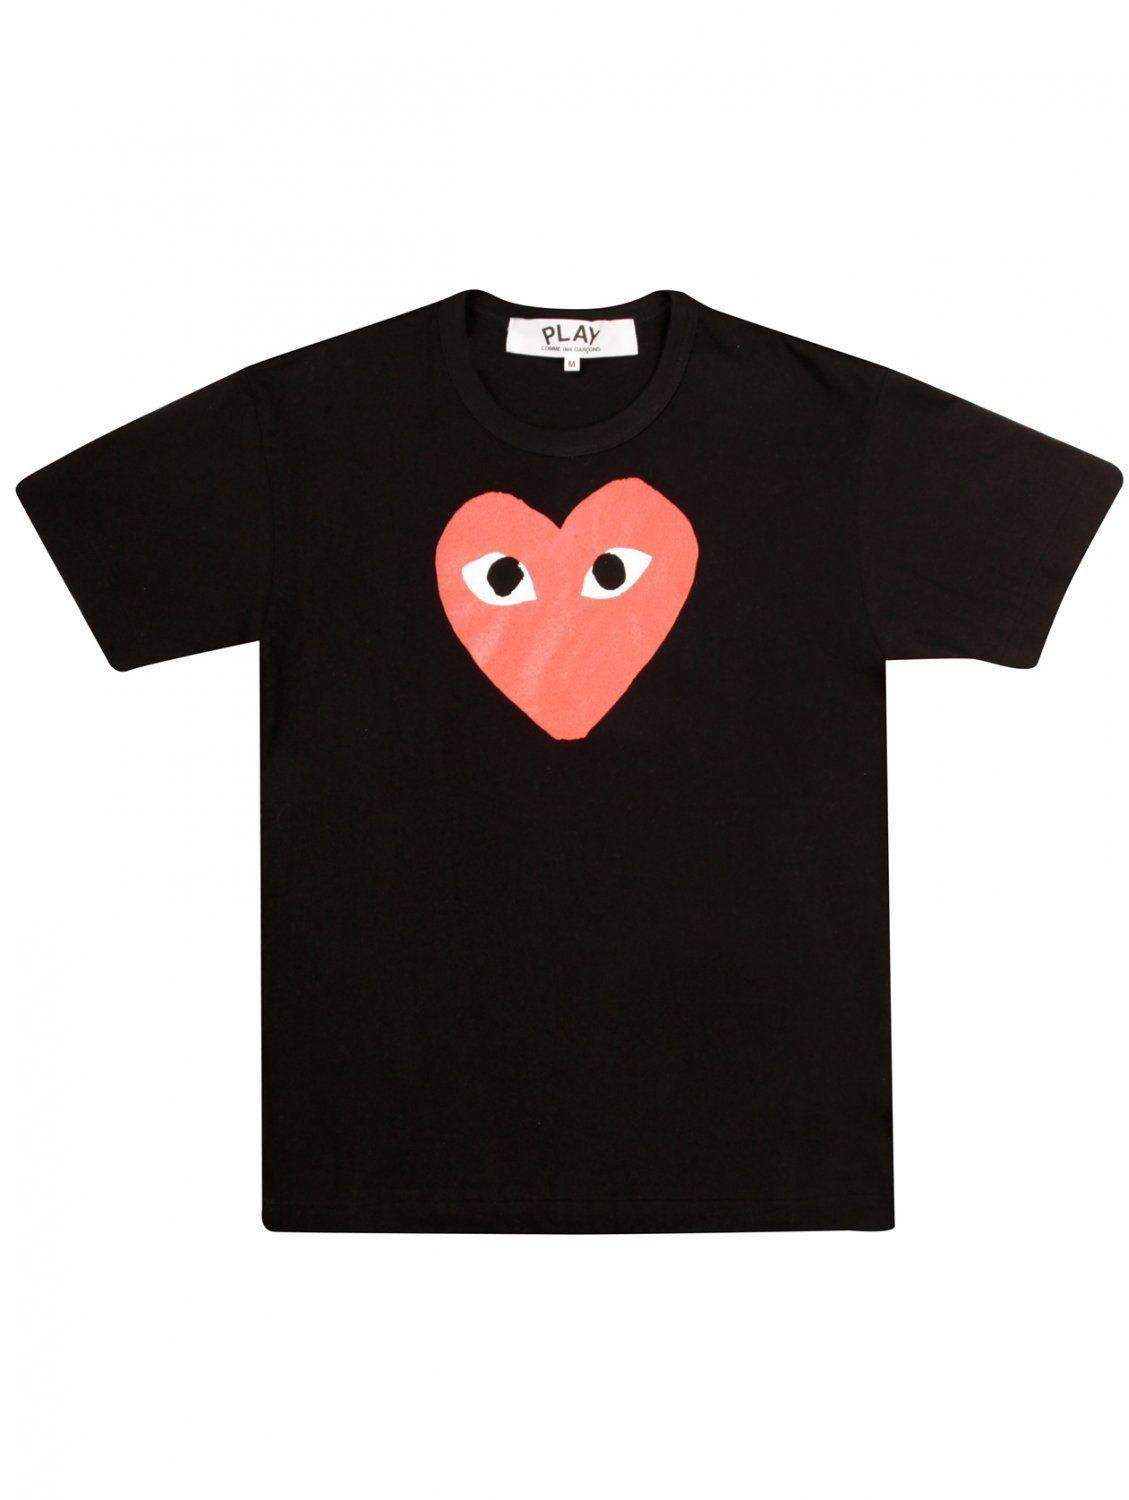 CDG Heart Logo - Comme Des Garcons PLAY Heart Logo T Shirt Black | HERVIA.COM